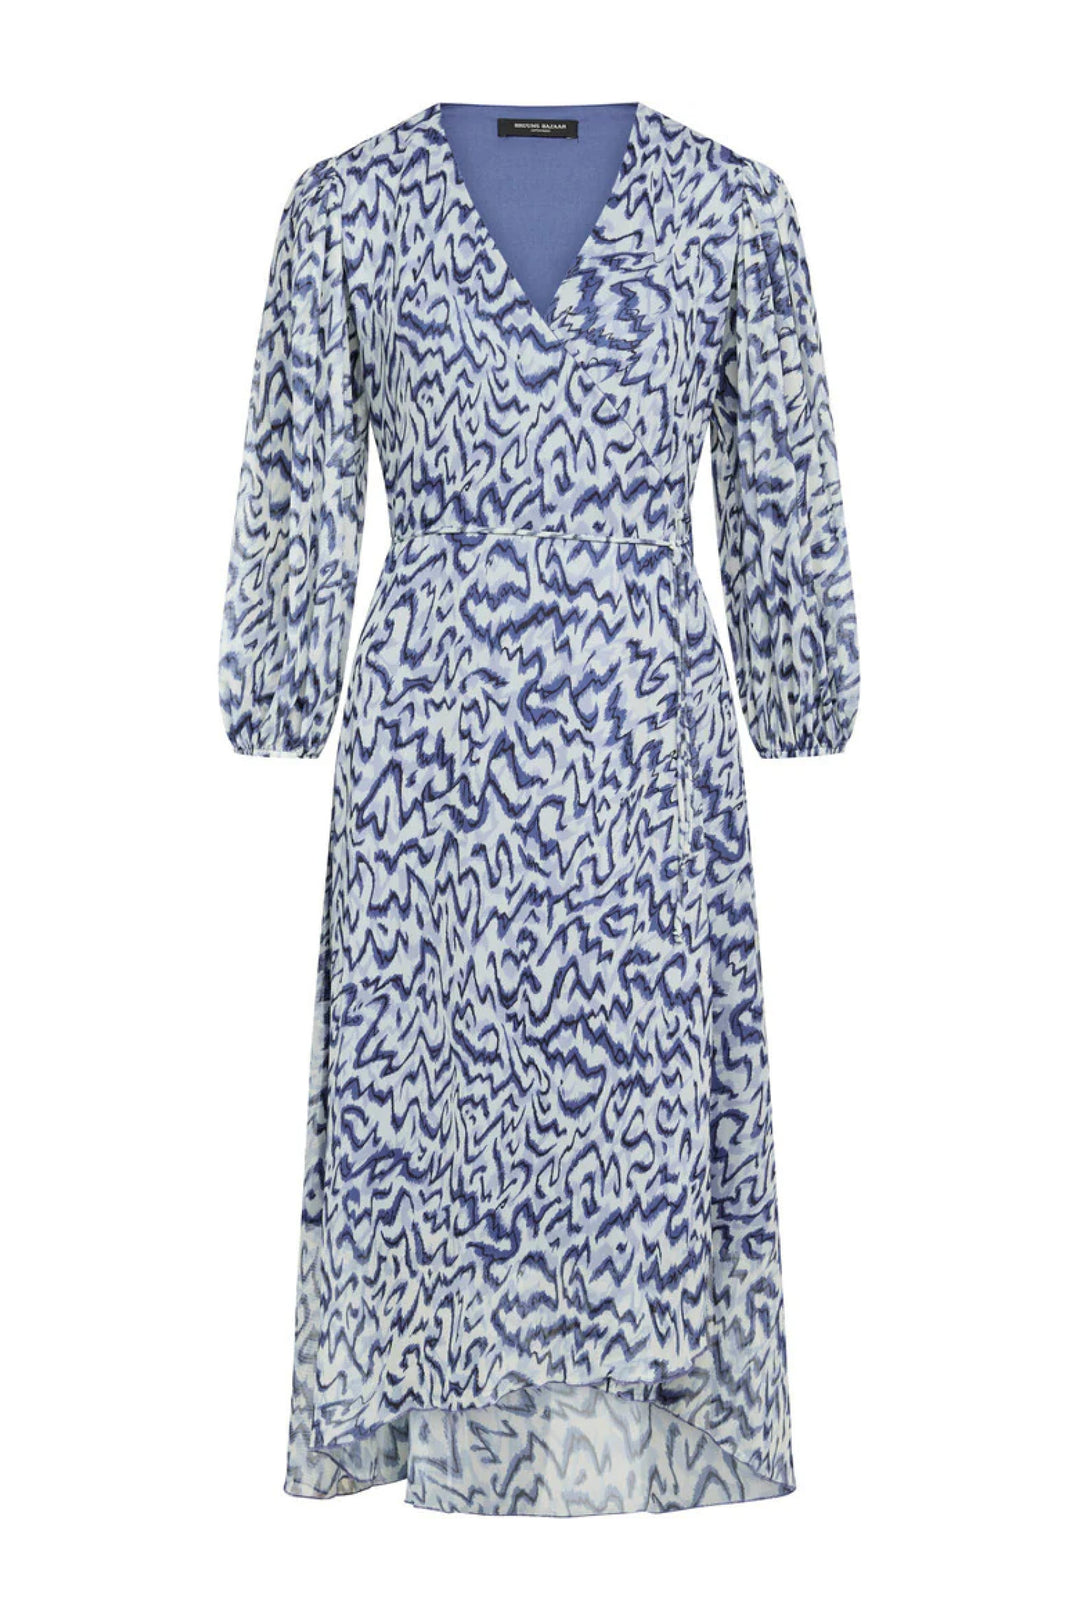 Bruuns Bazaar Women PhloxBBNoriel dress Dress Blue Print